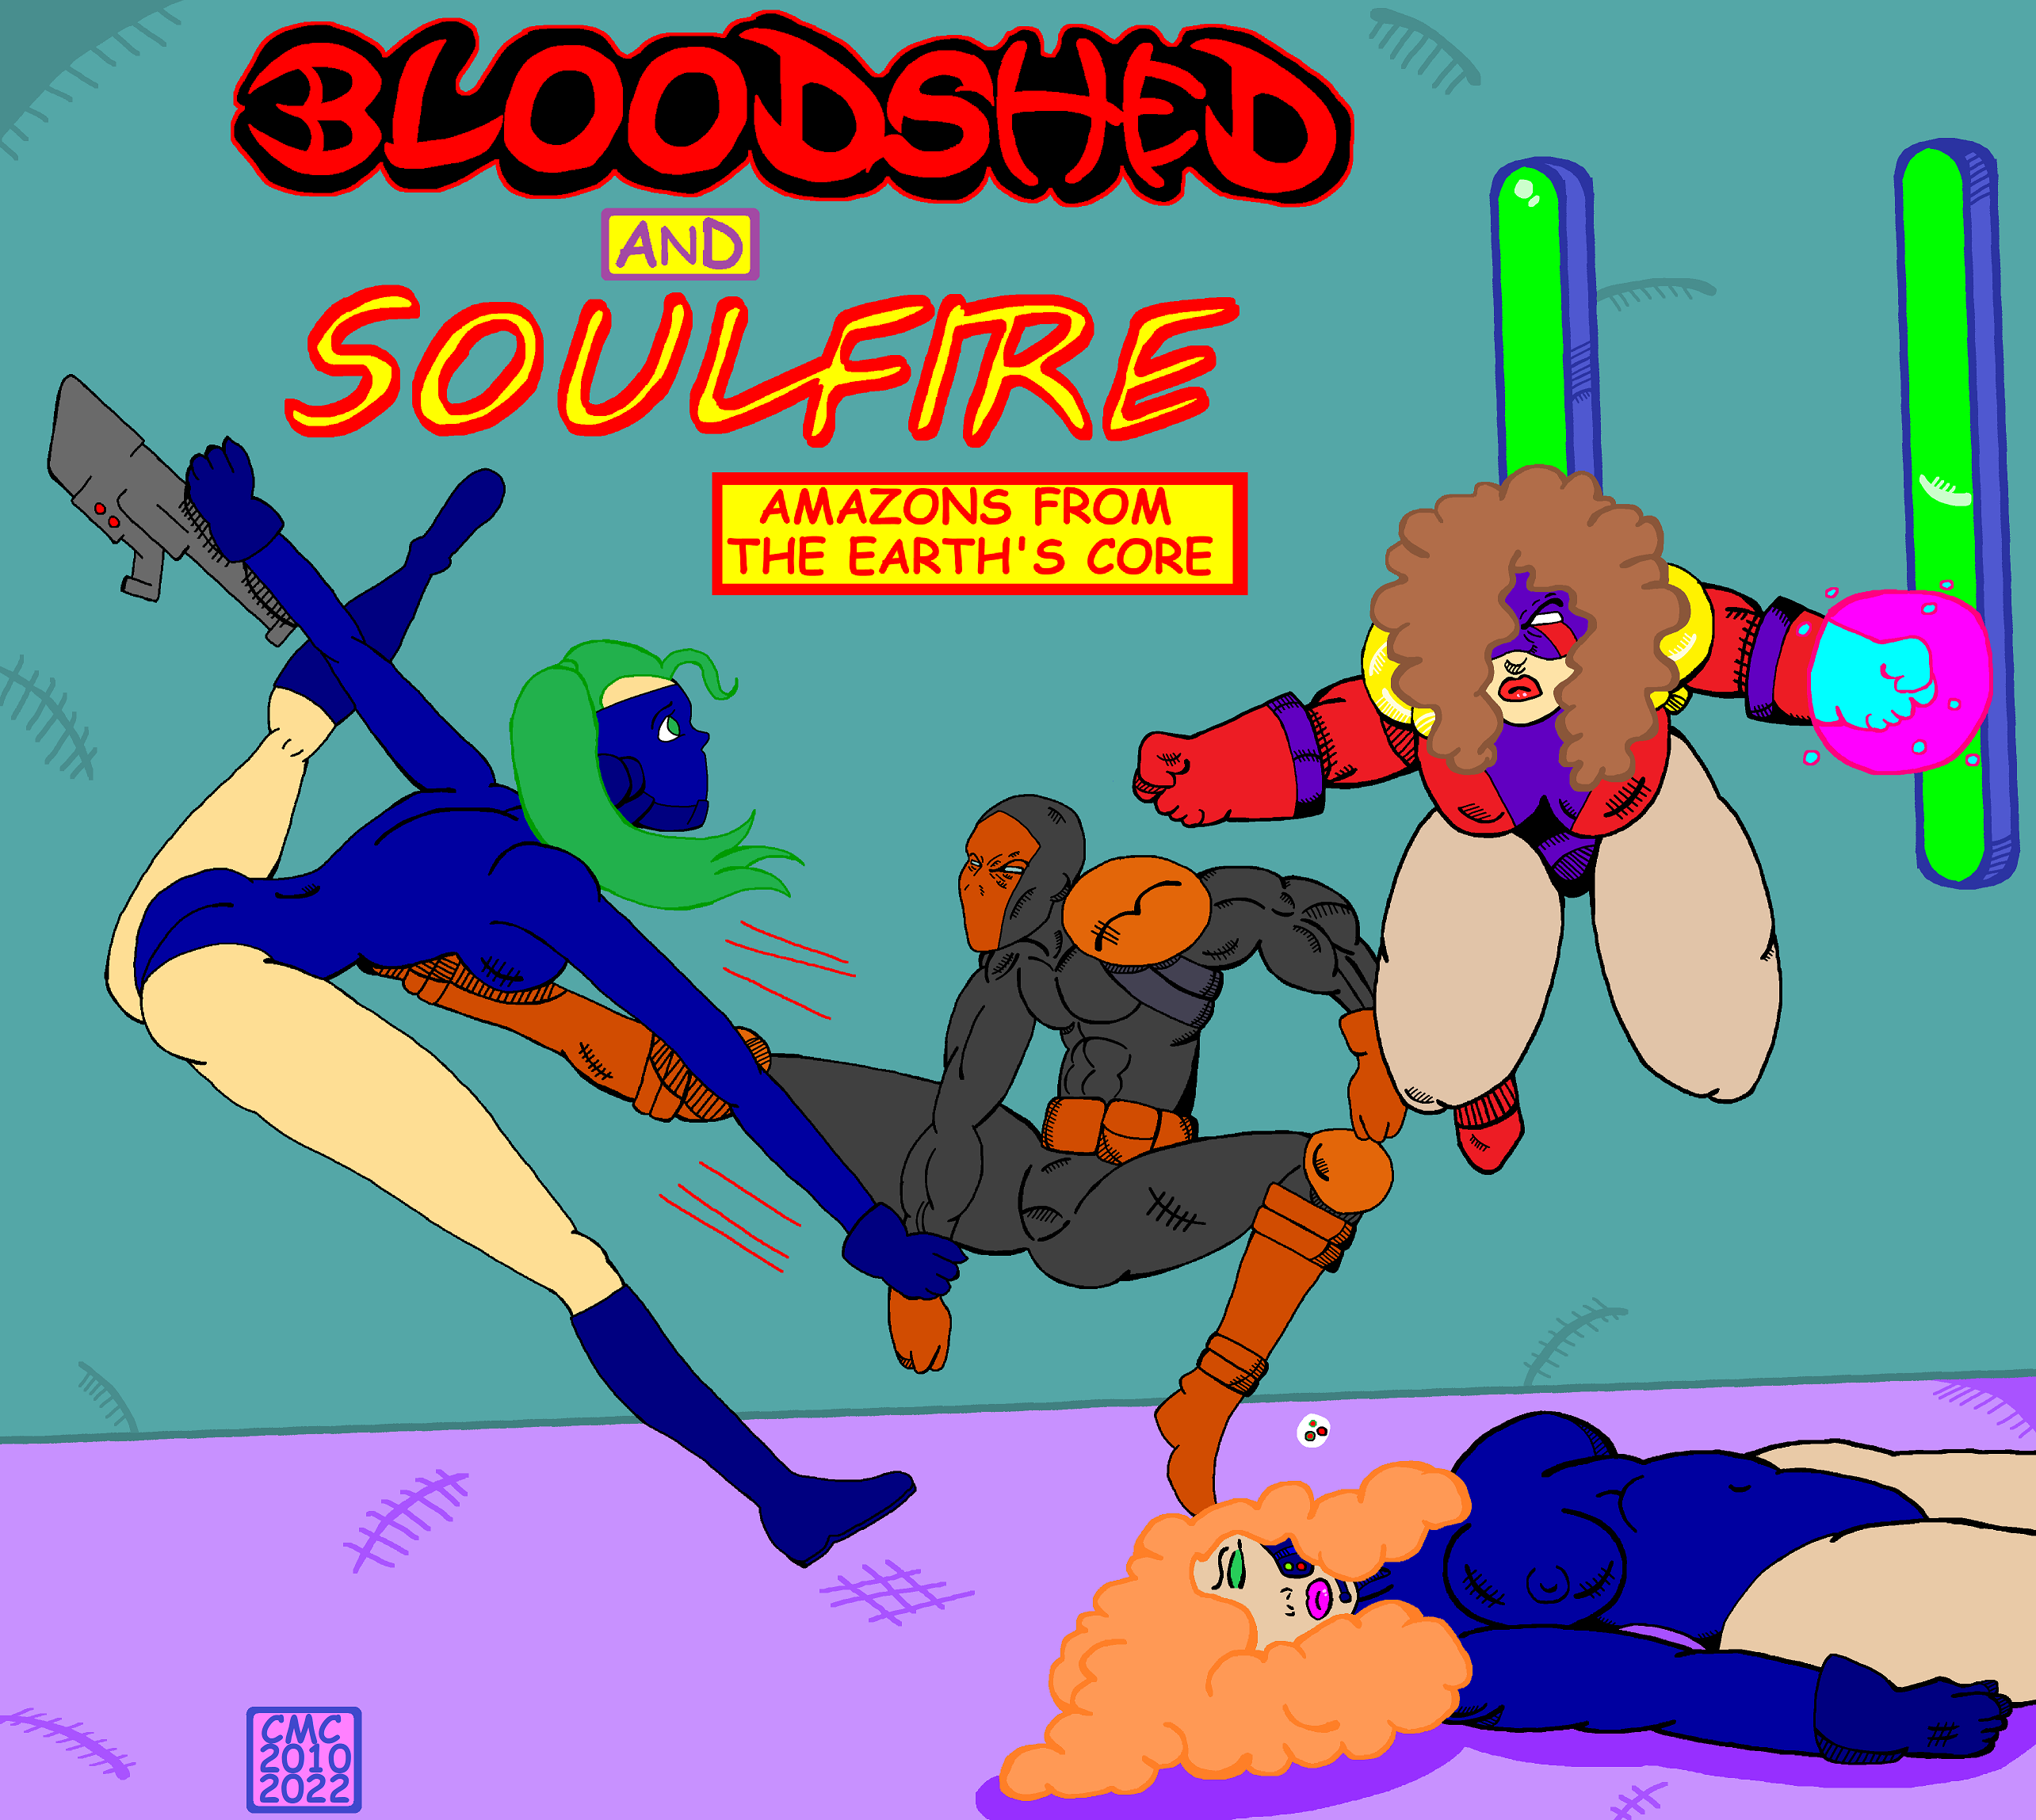 BLOODSHED & SOULFIRE '10 #1-e.png